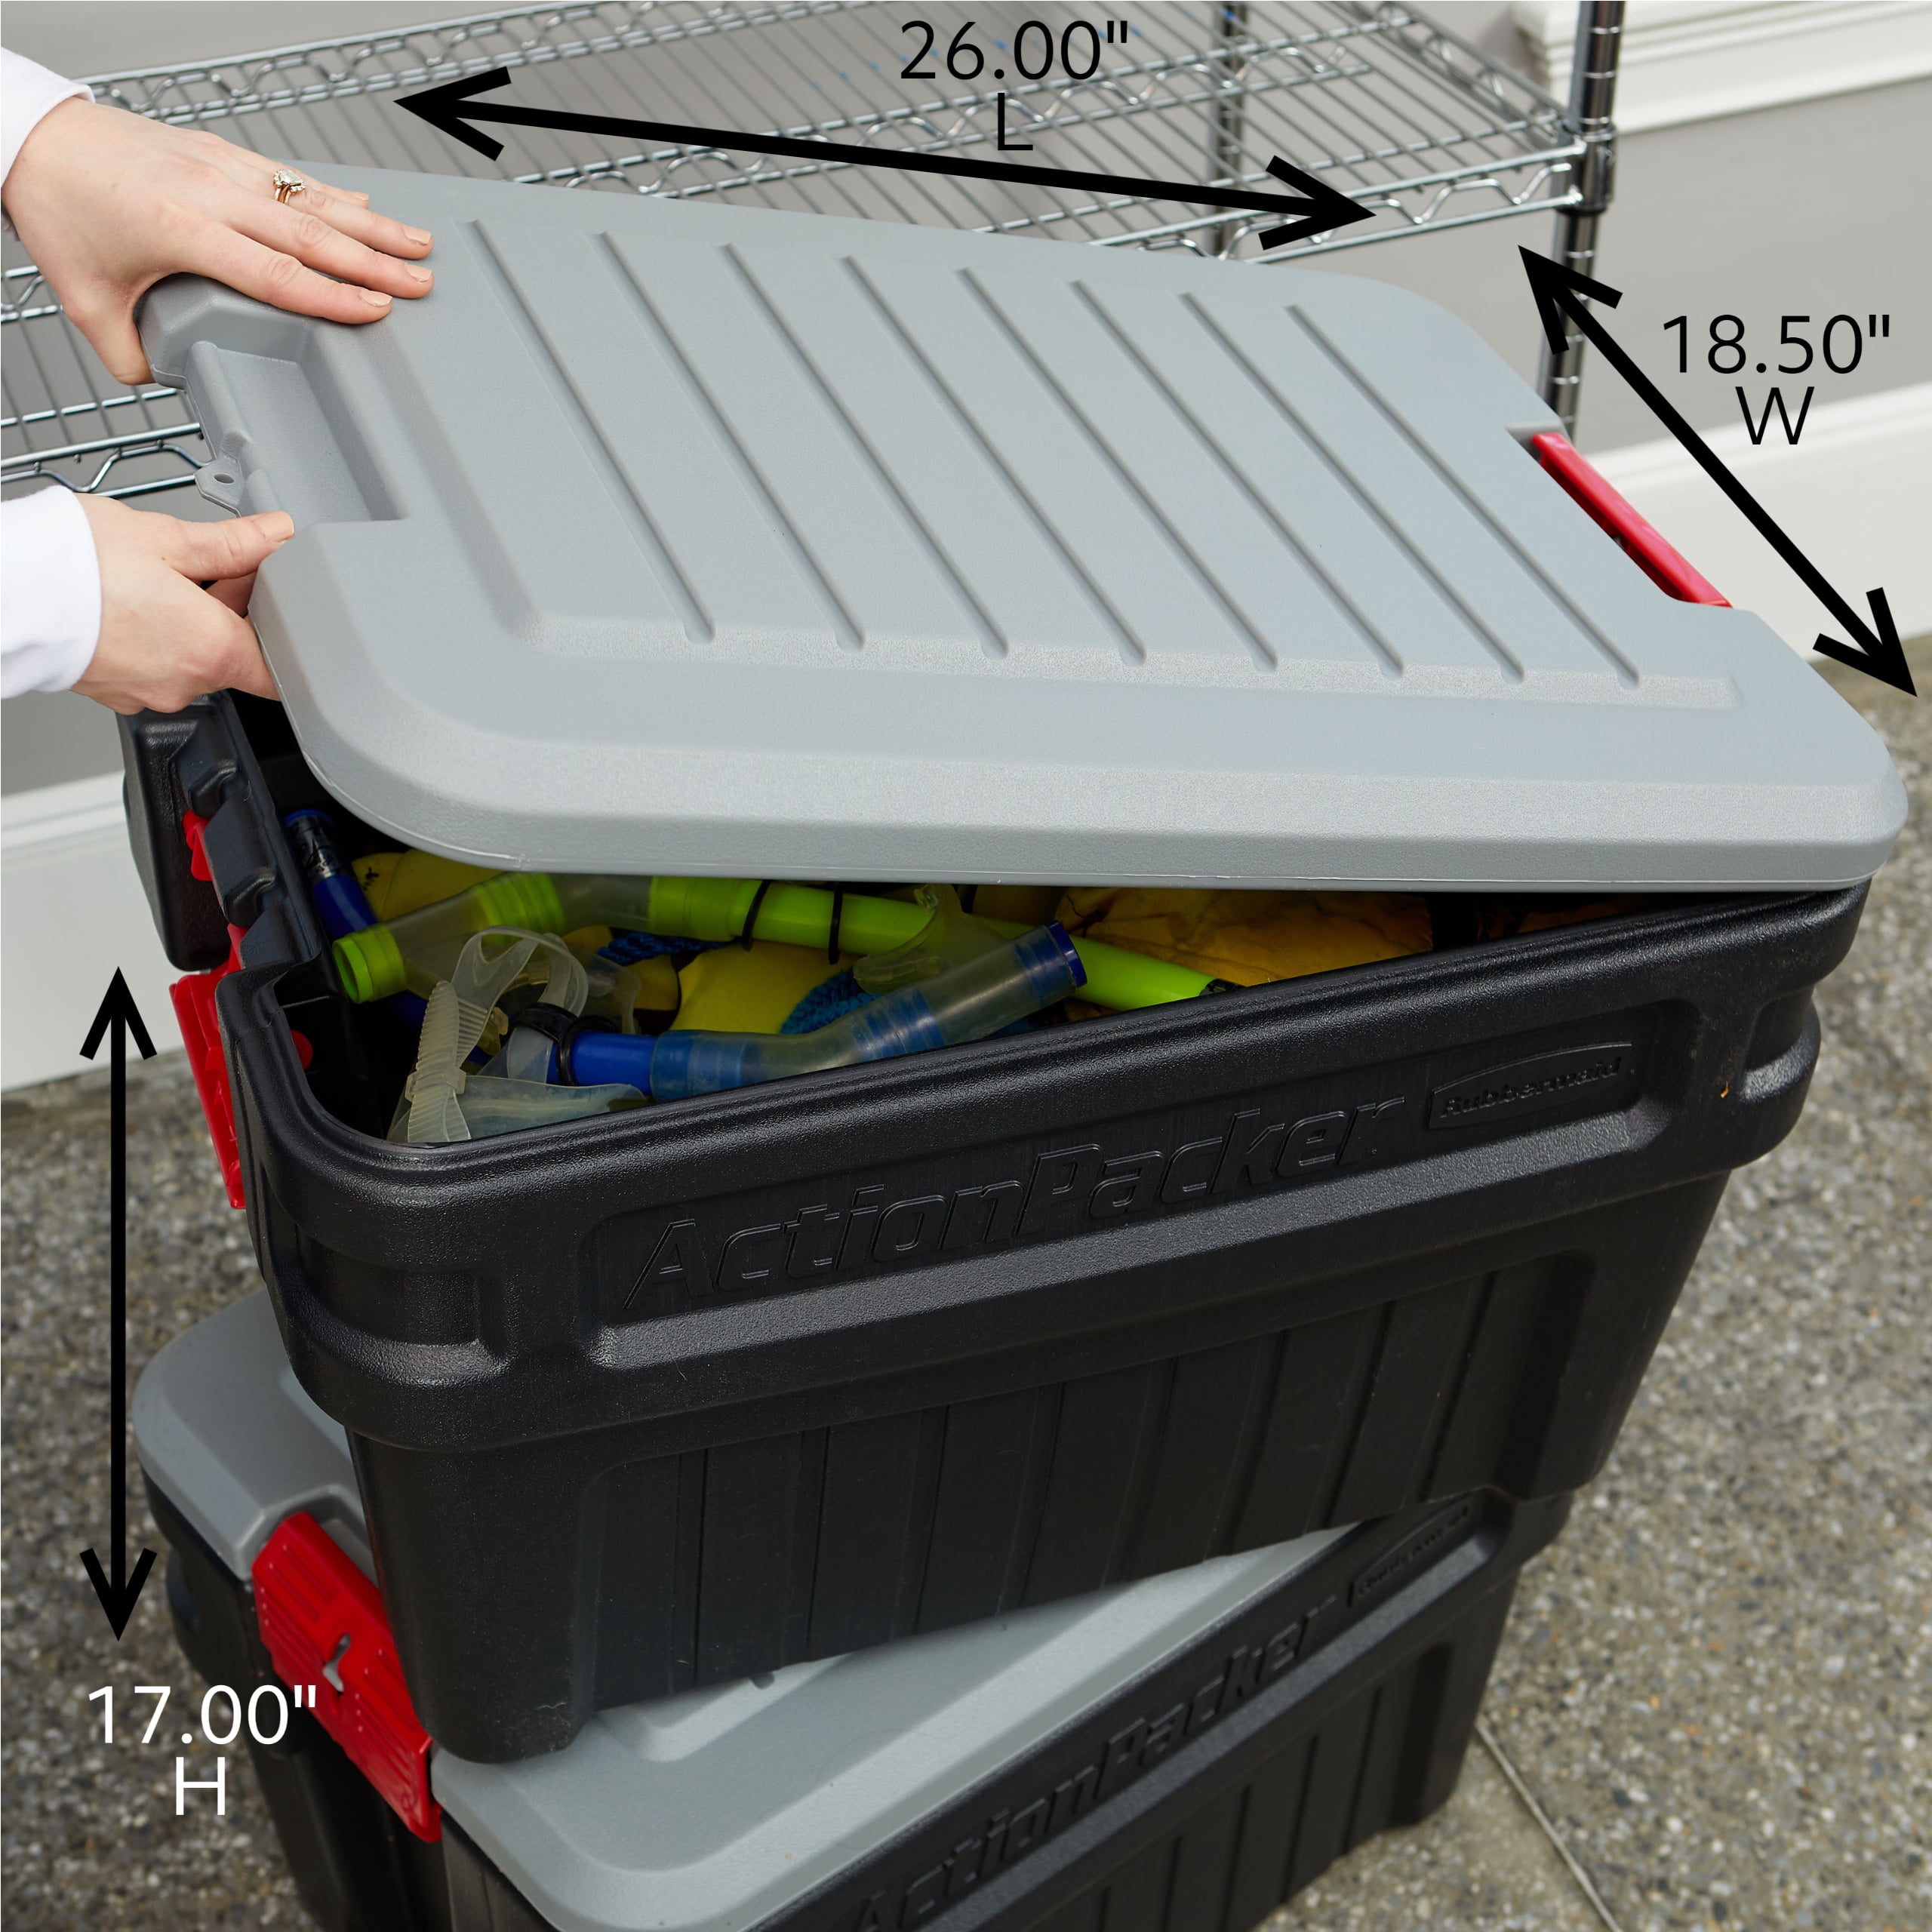 Lot - (4) Rubbermaid Action Packer Storage Bins